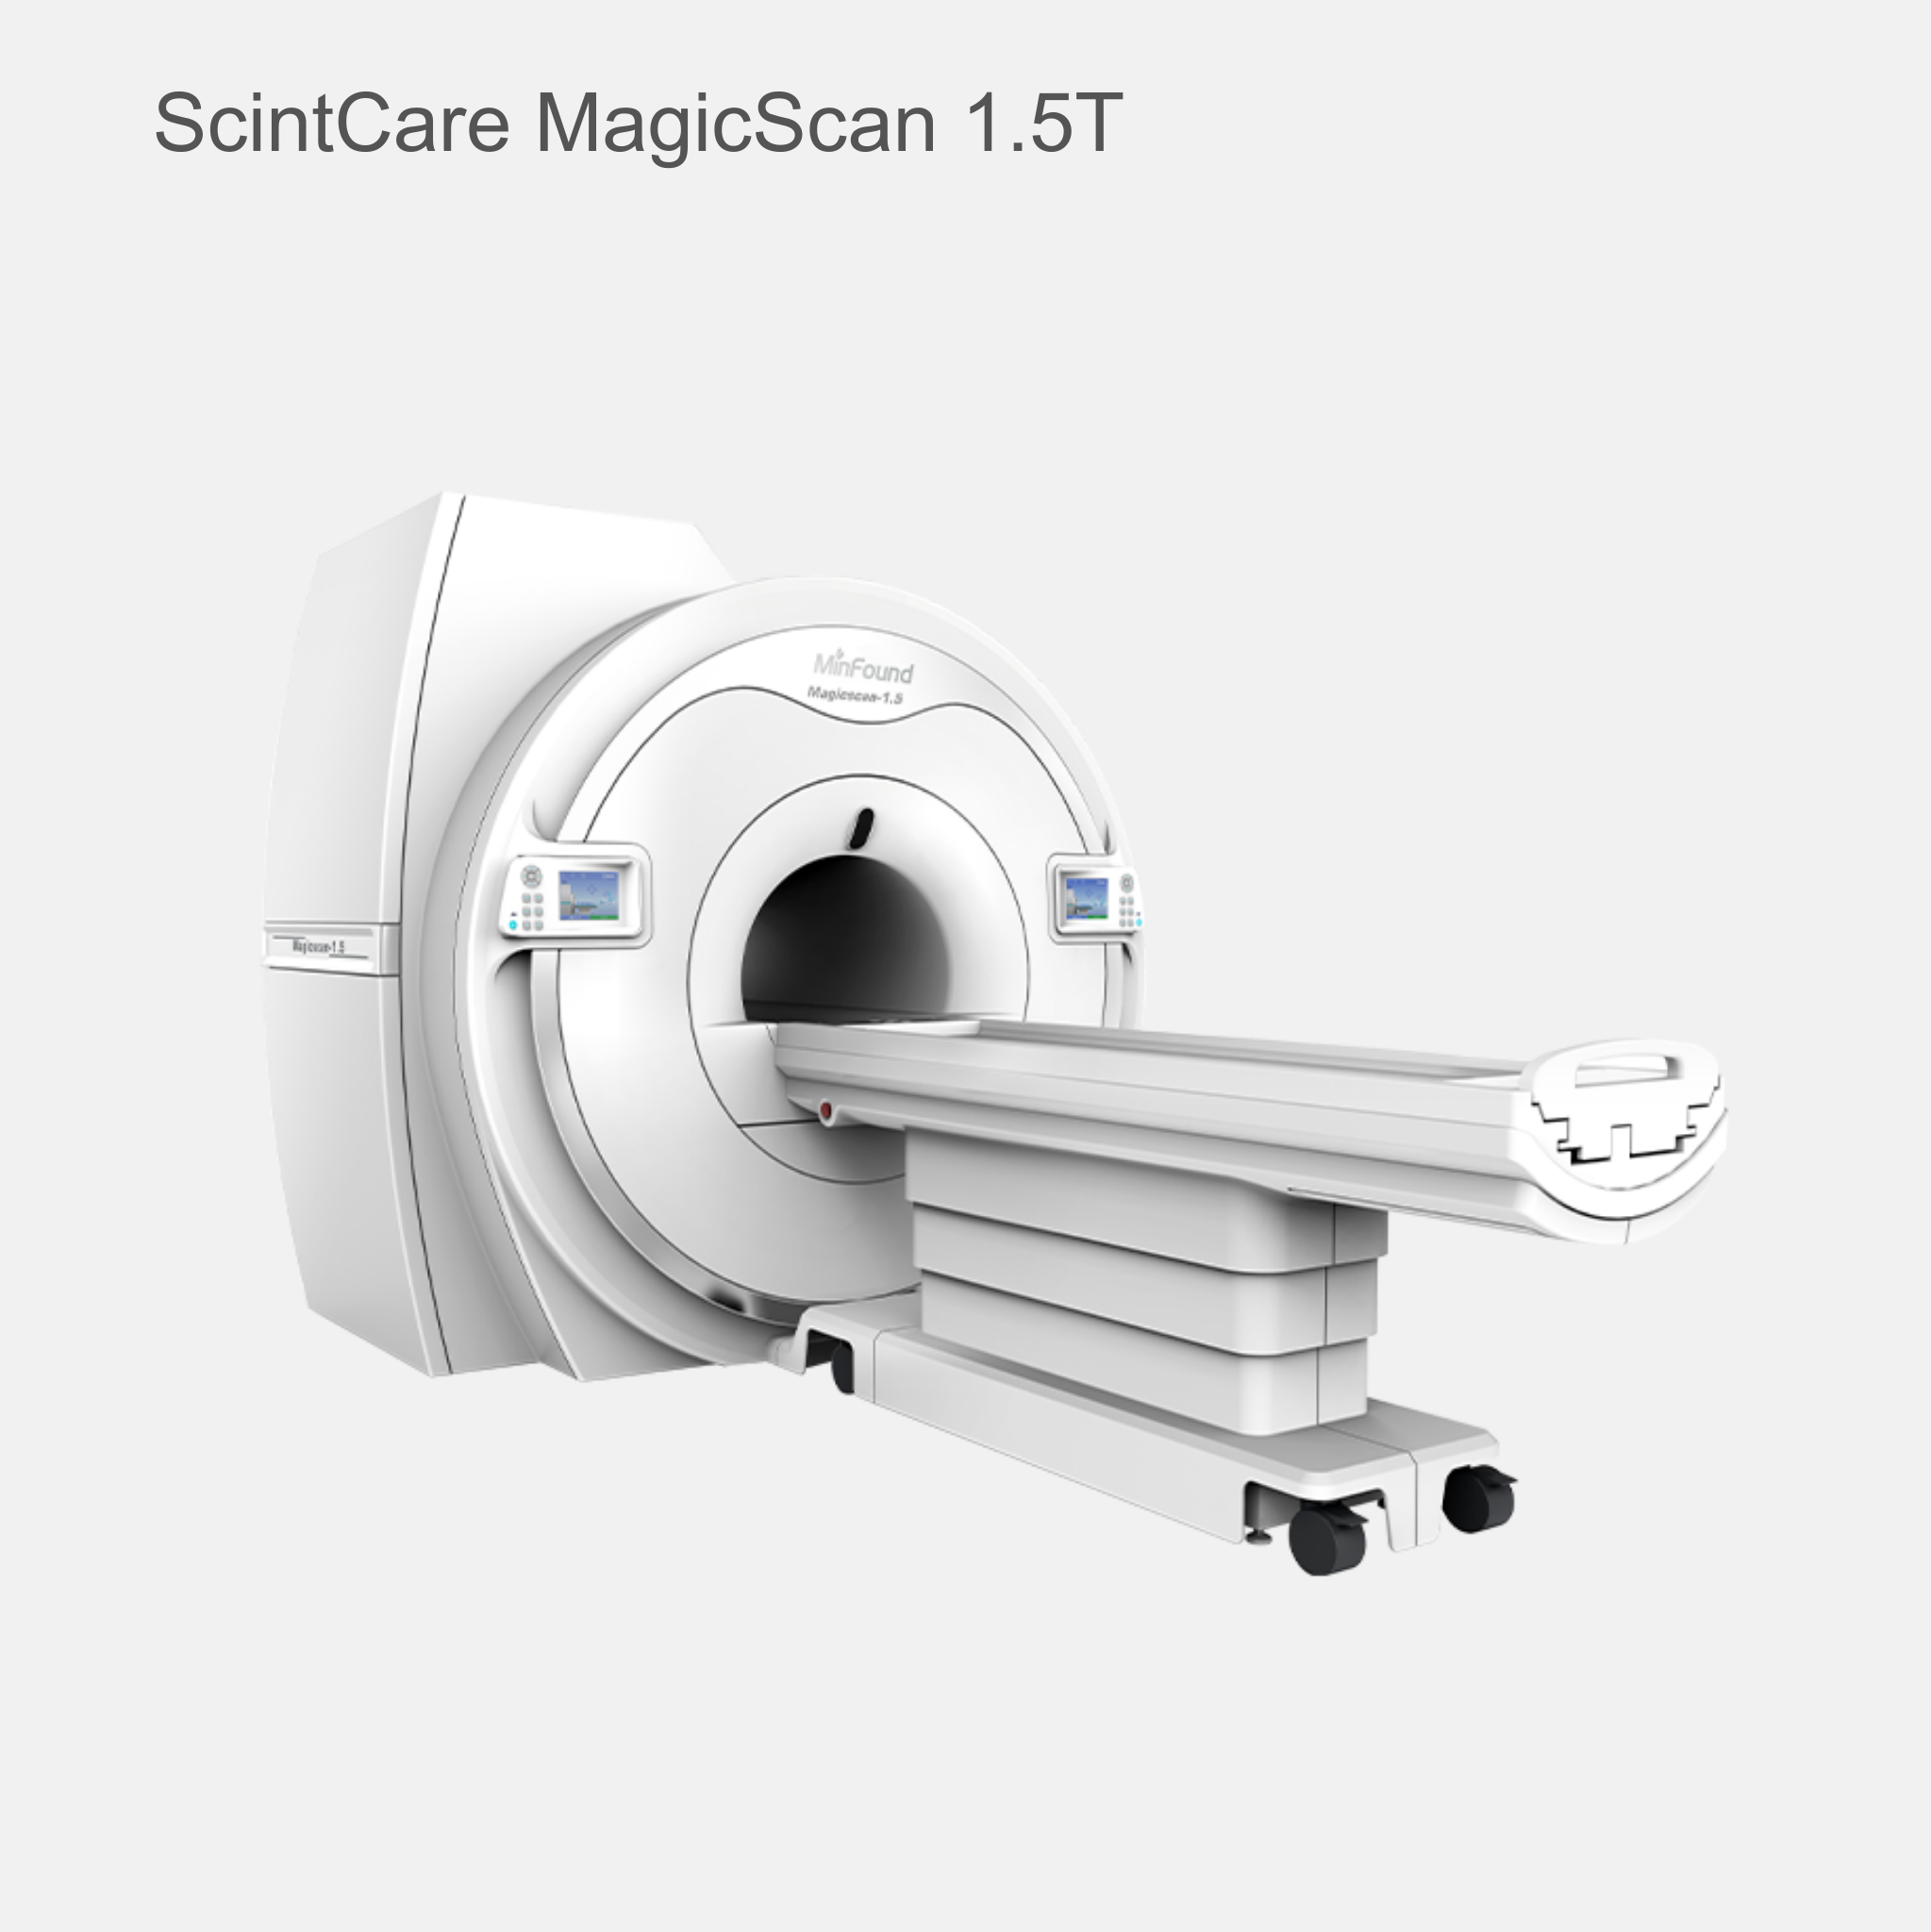 ScintCare MagicScan 1.5T